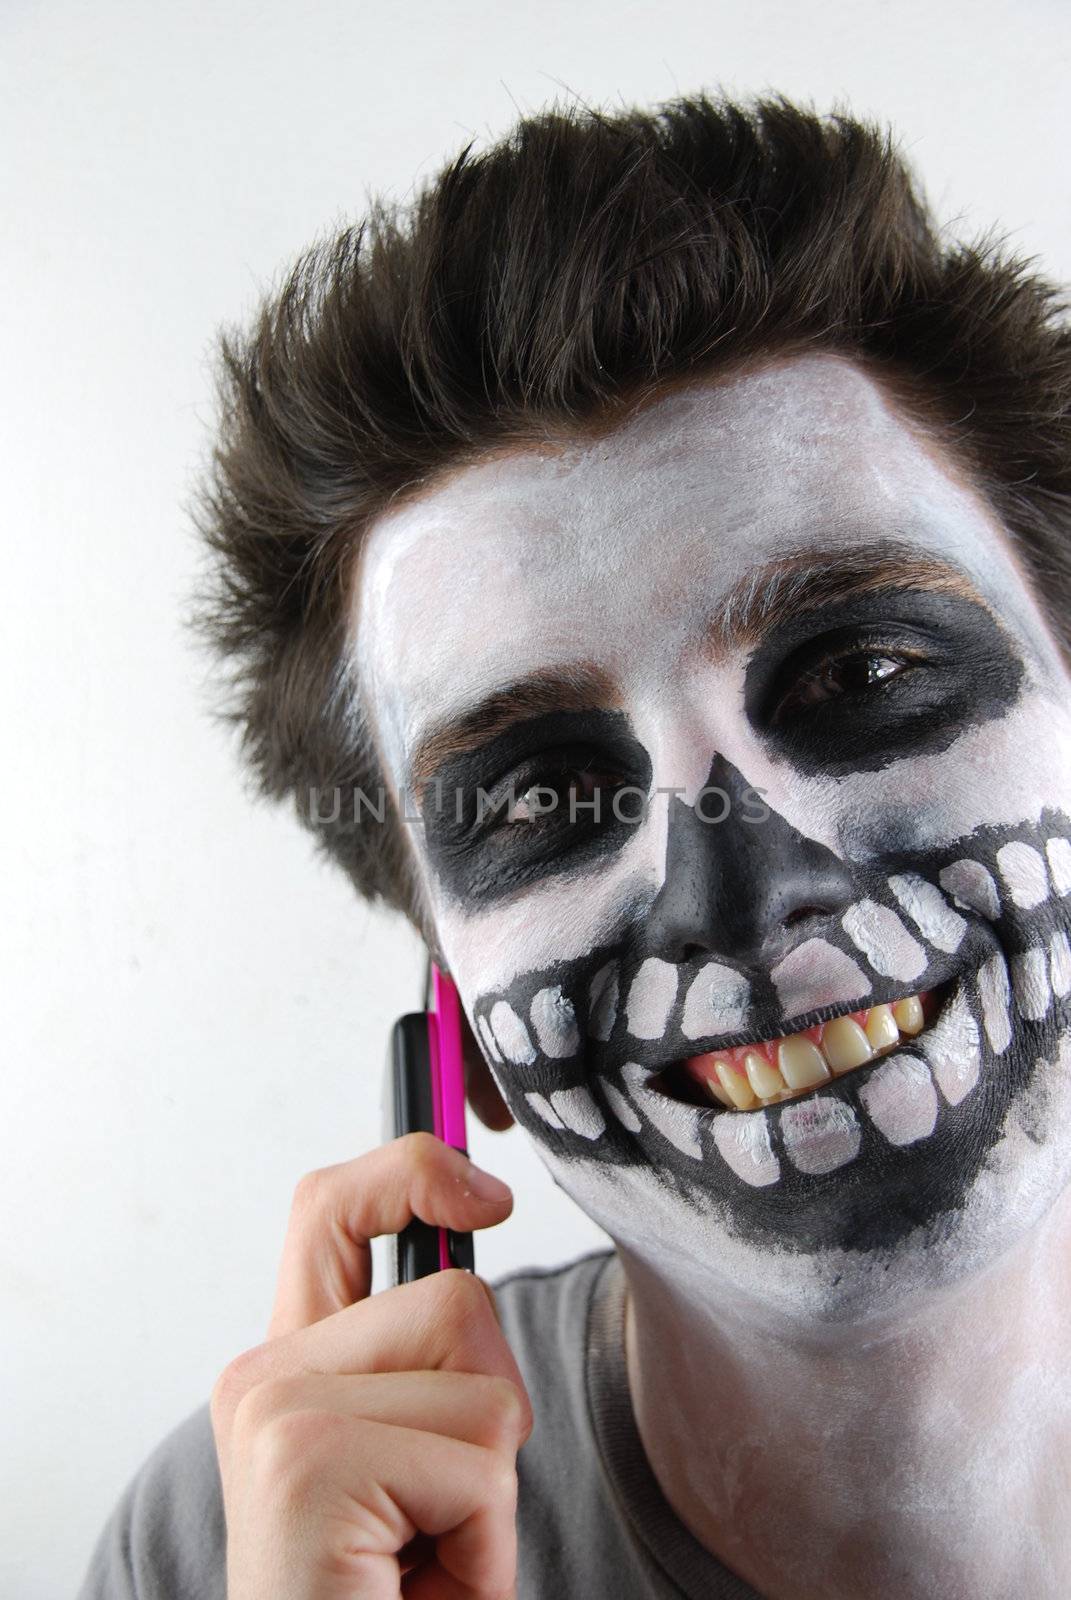 Skeleton guy talking on mobile phone by luissantos84